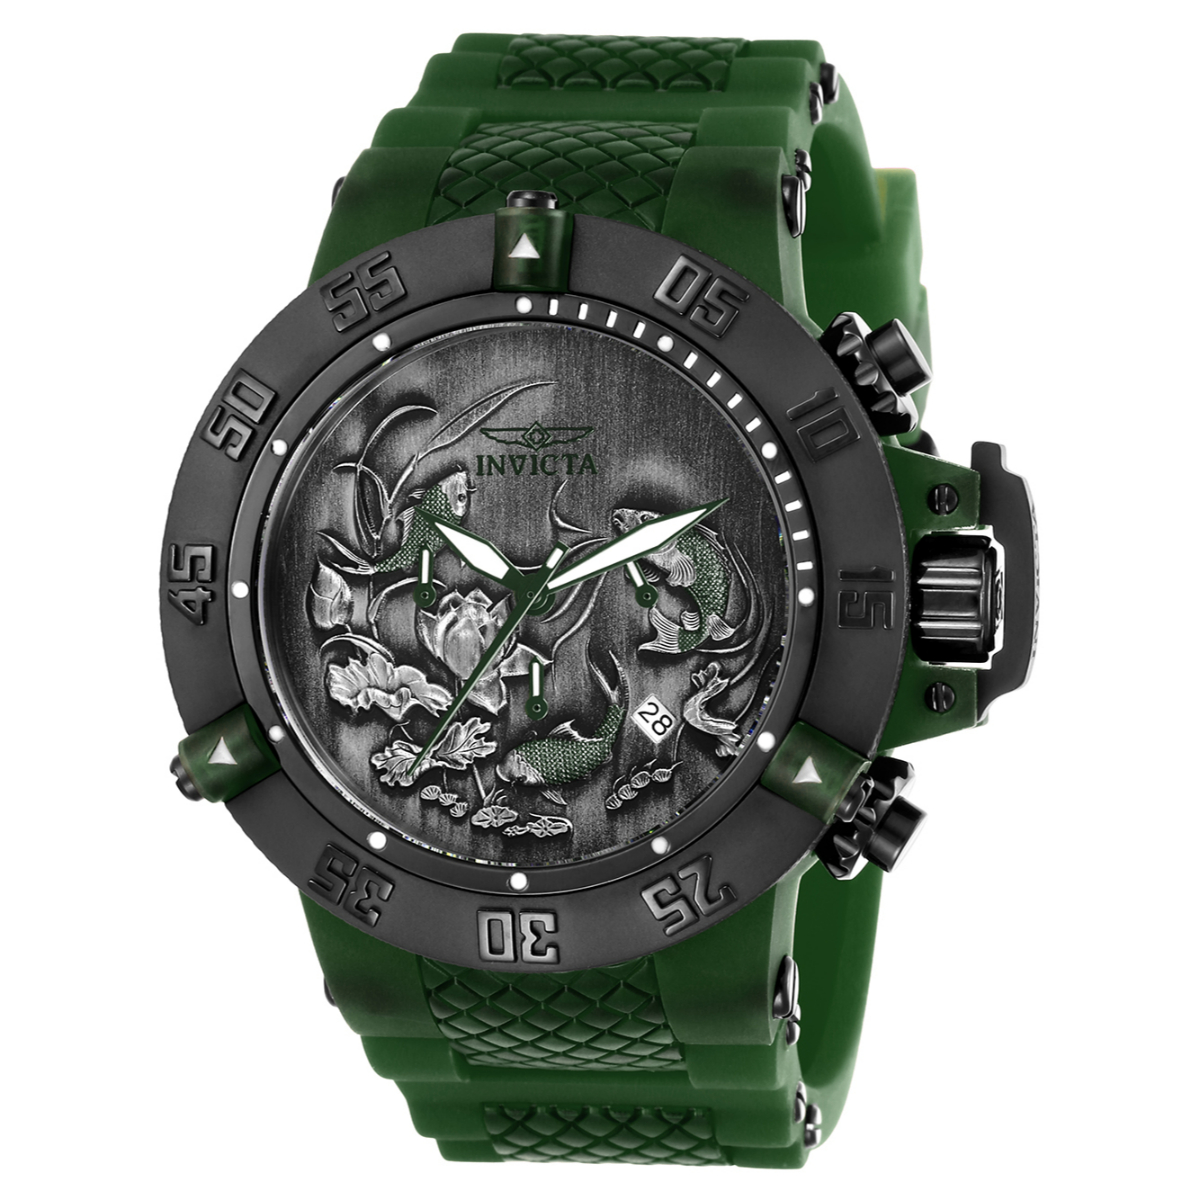 Invicta Subaqua Men's Watch - 50mm, Black, Green (ZG-26563)